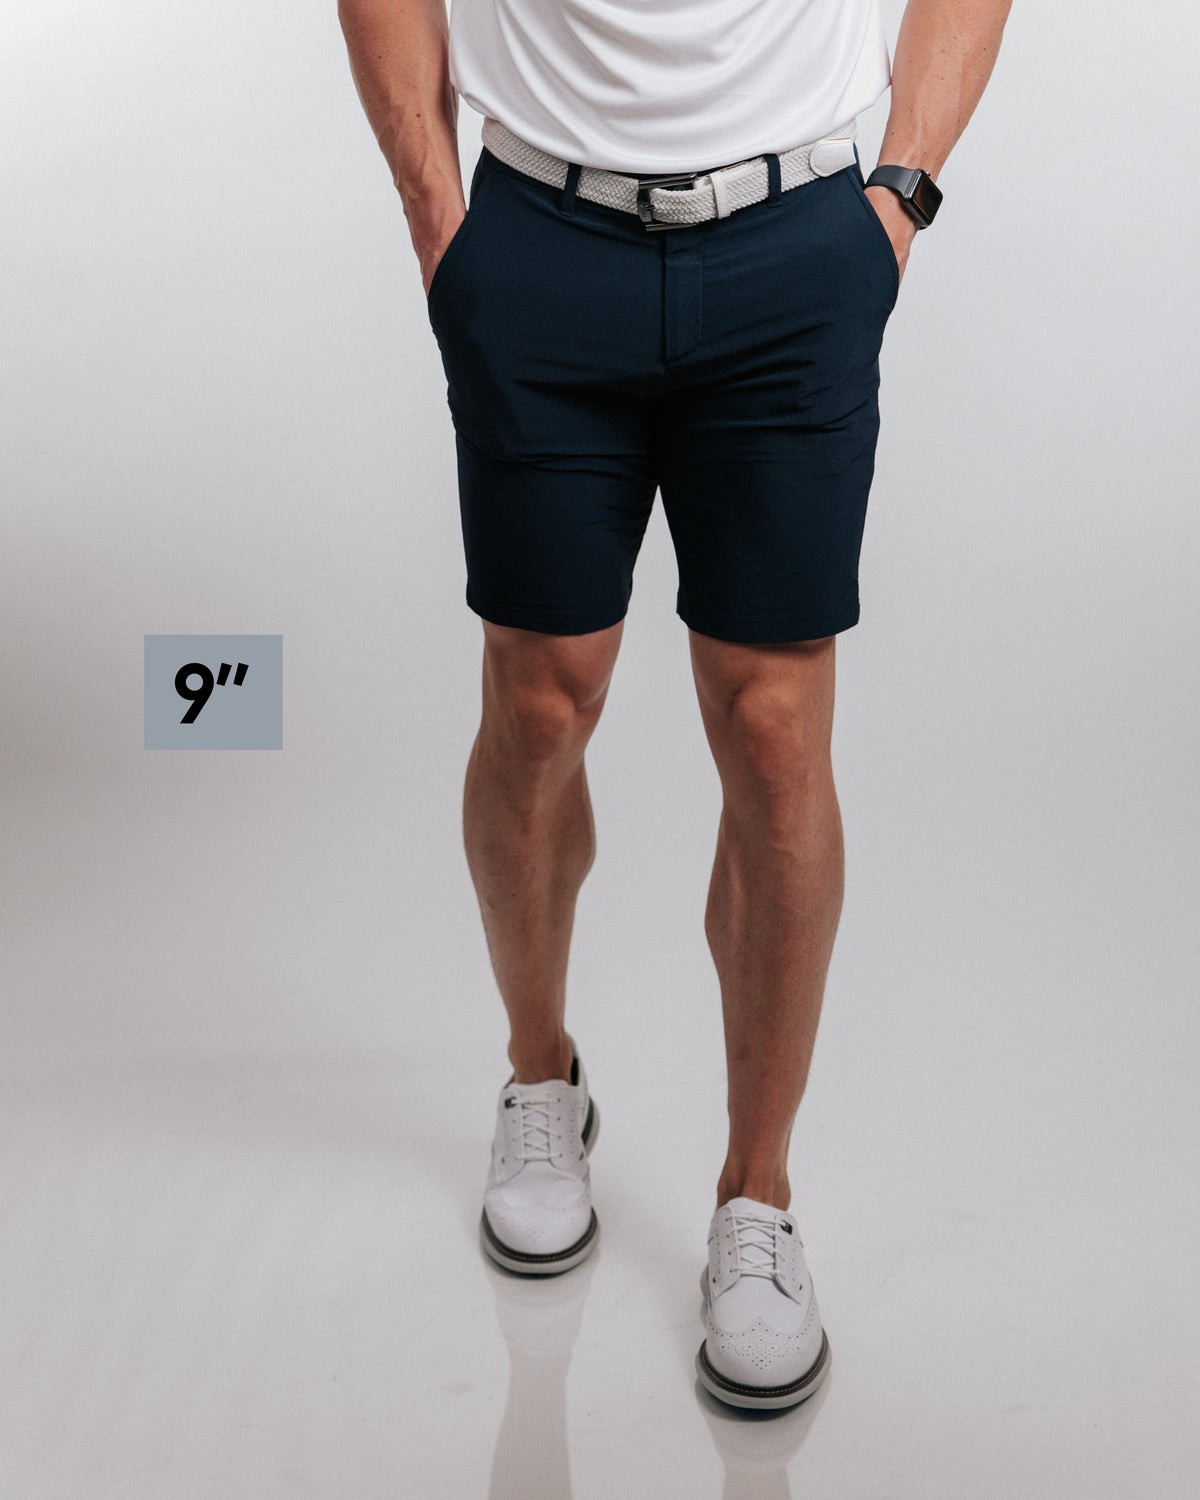 Primo Navy Blue Shorts - 7", 9", 11"